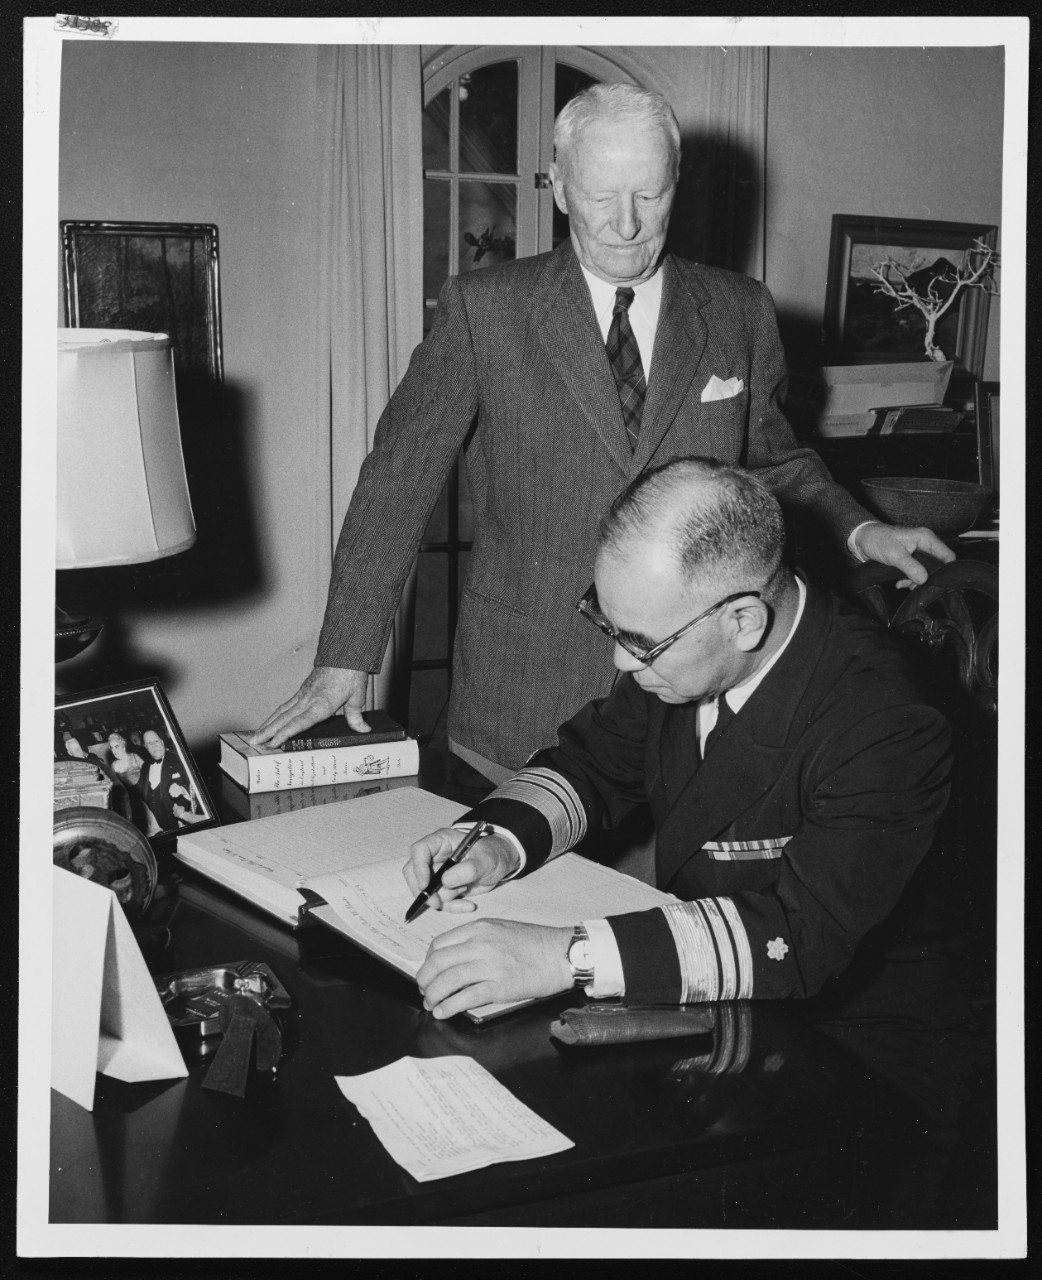 Fleet Admiral C.W. Nimitz with Japanese Visitor